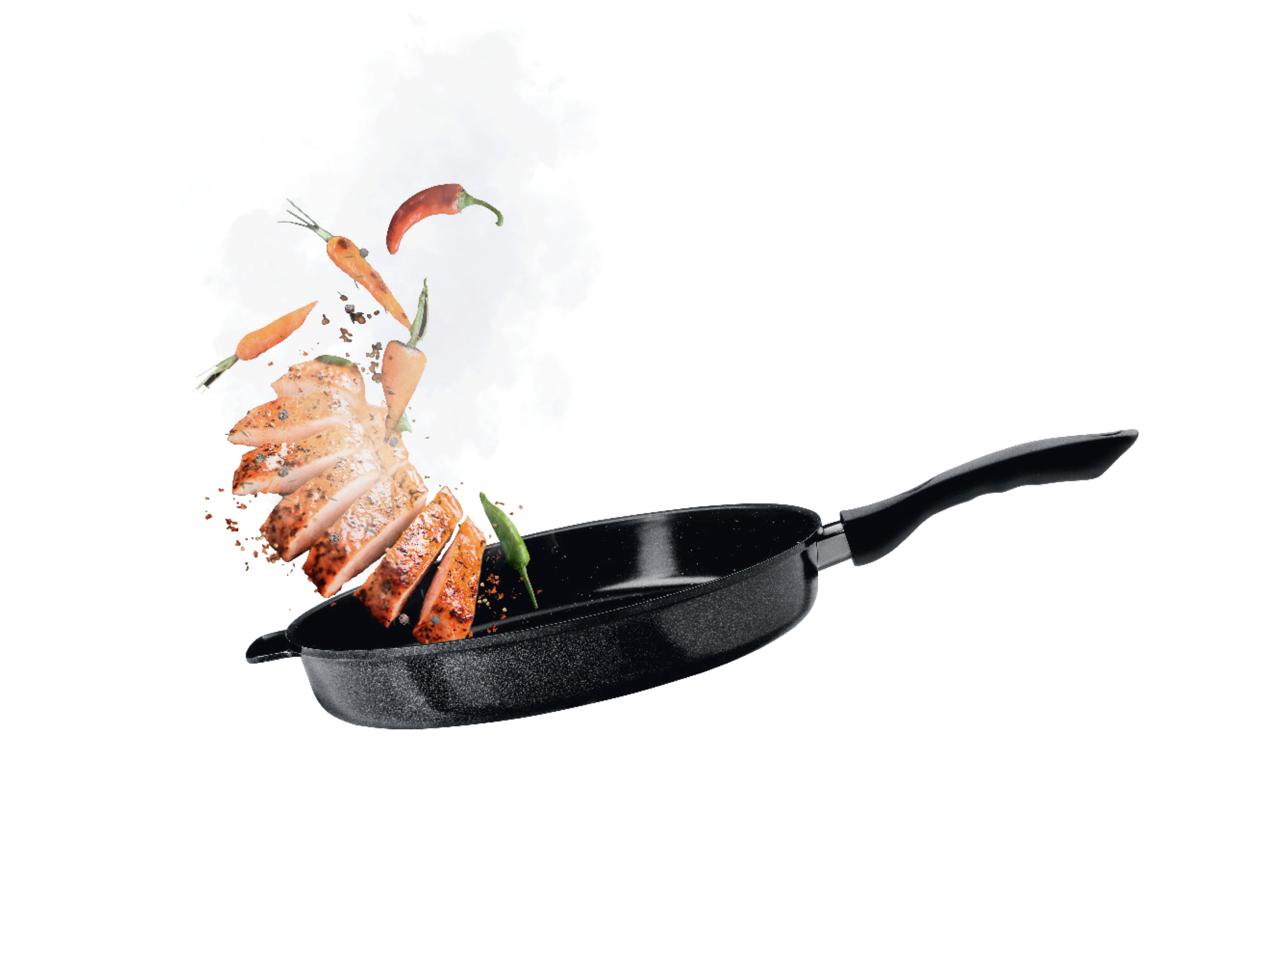 ERNESTO(R) 32cm Ceramic Frying Pan